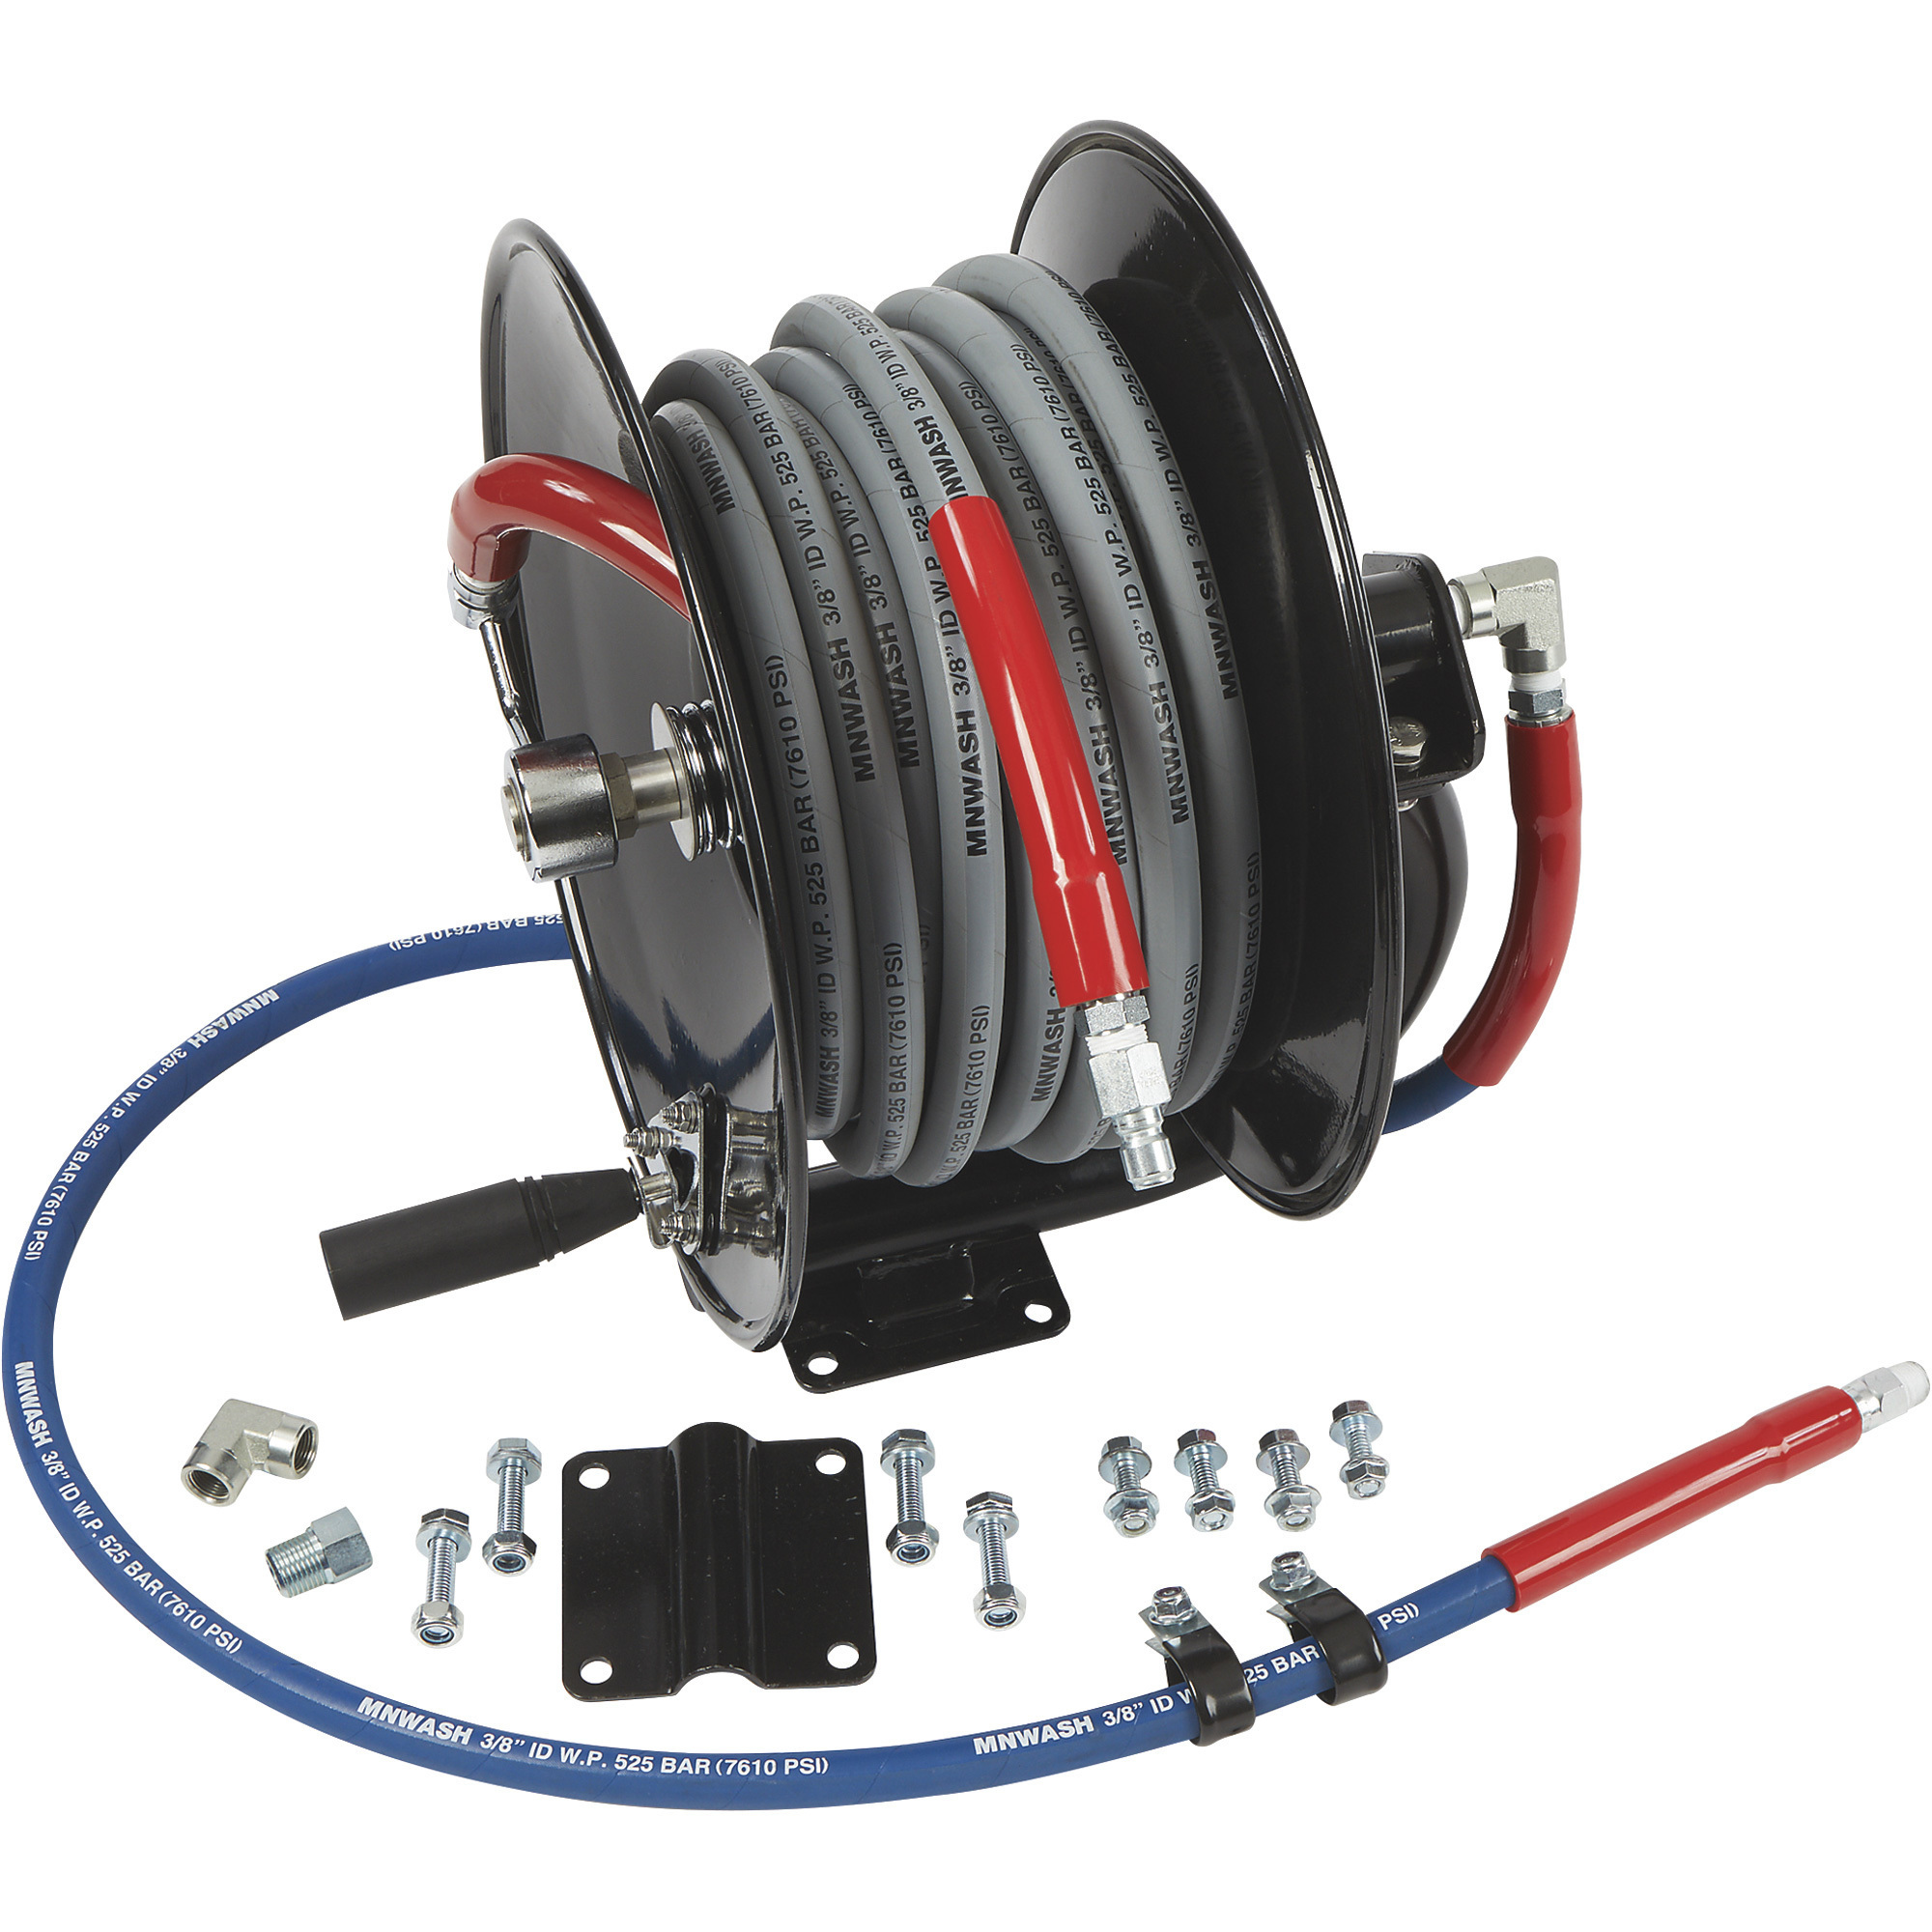  Pressure Washer Hose Reel Kit for 100 FT of 3/8” Power